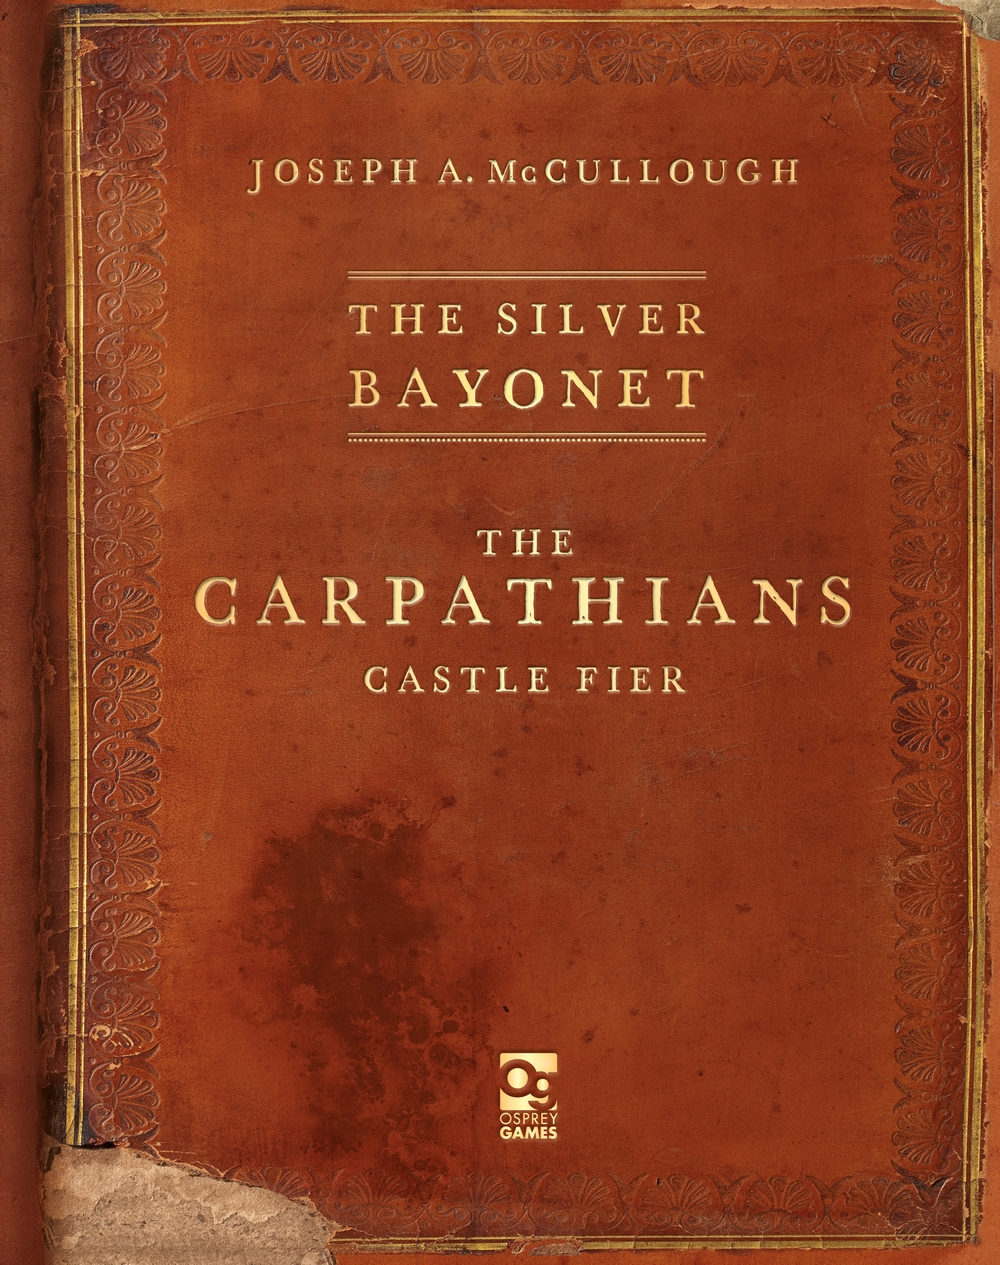 Silver Bayonet: The Carpathians book jacket